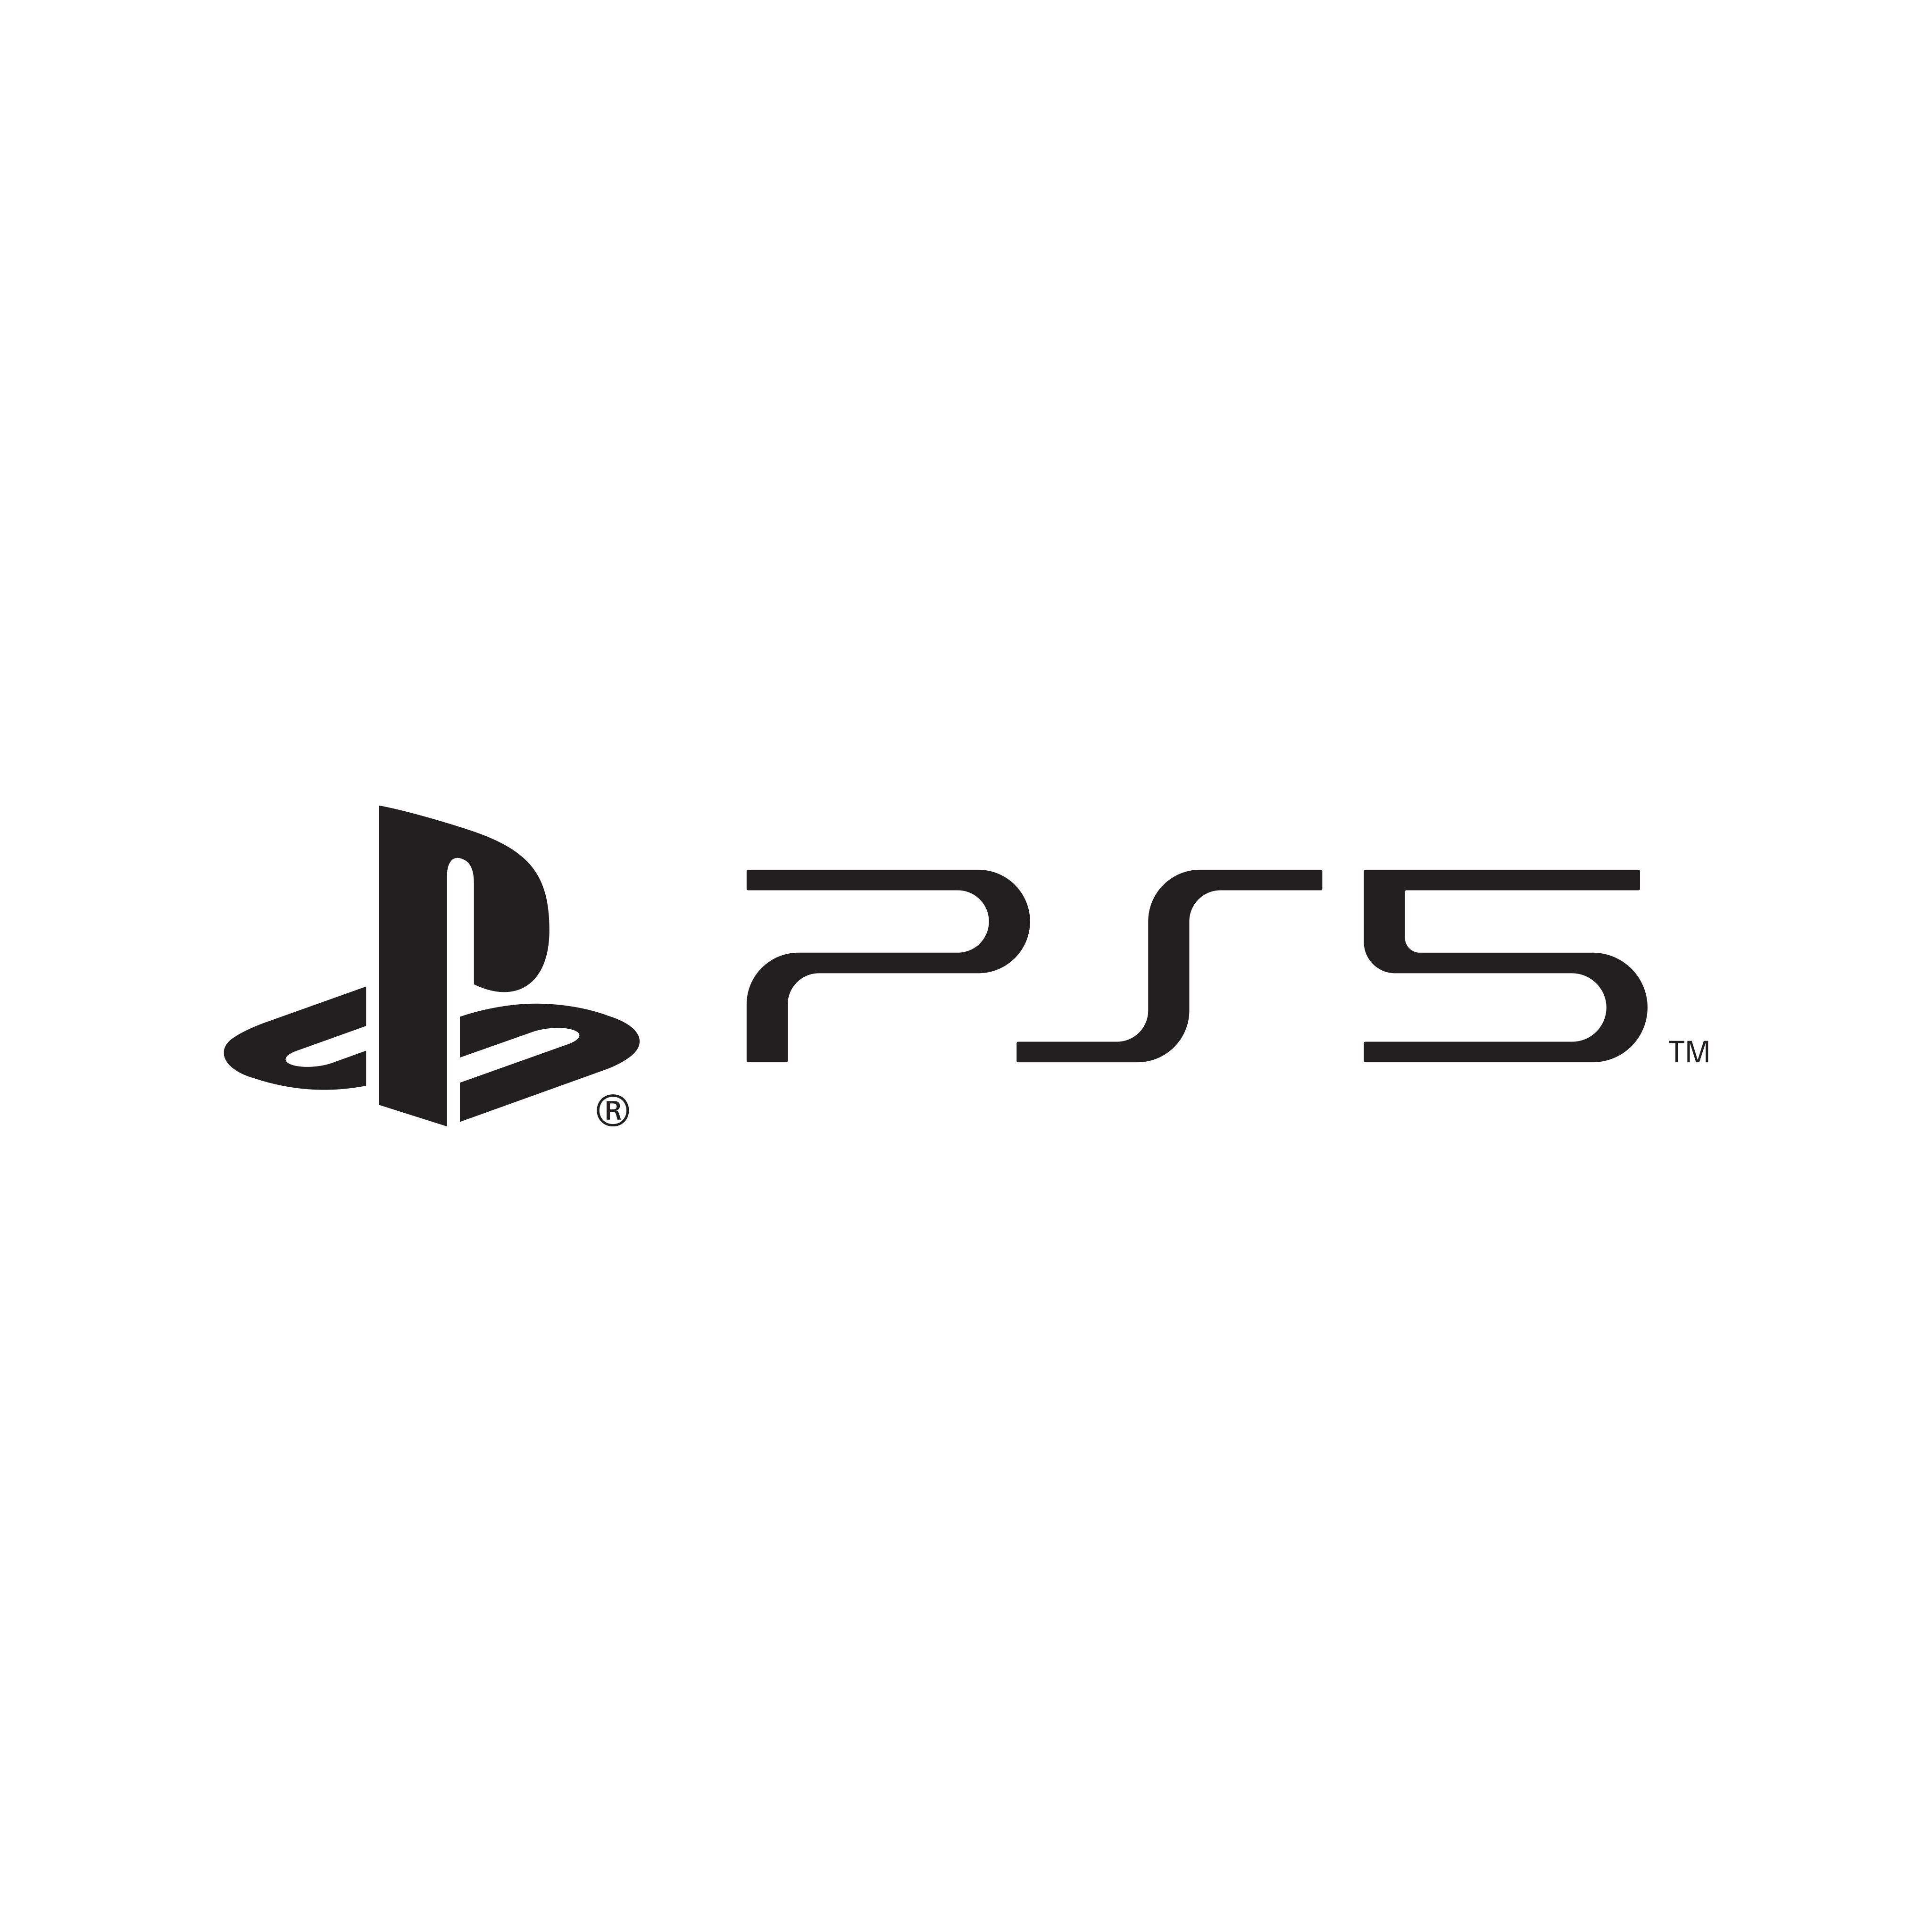 Ps5 Logo PNG File | PNG Mart